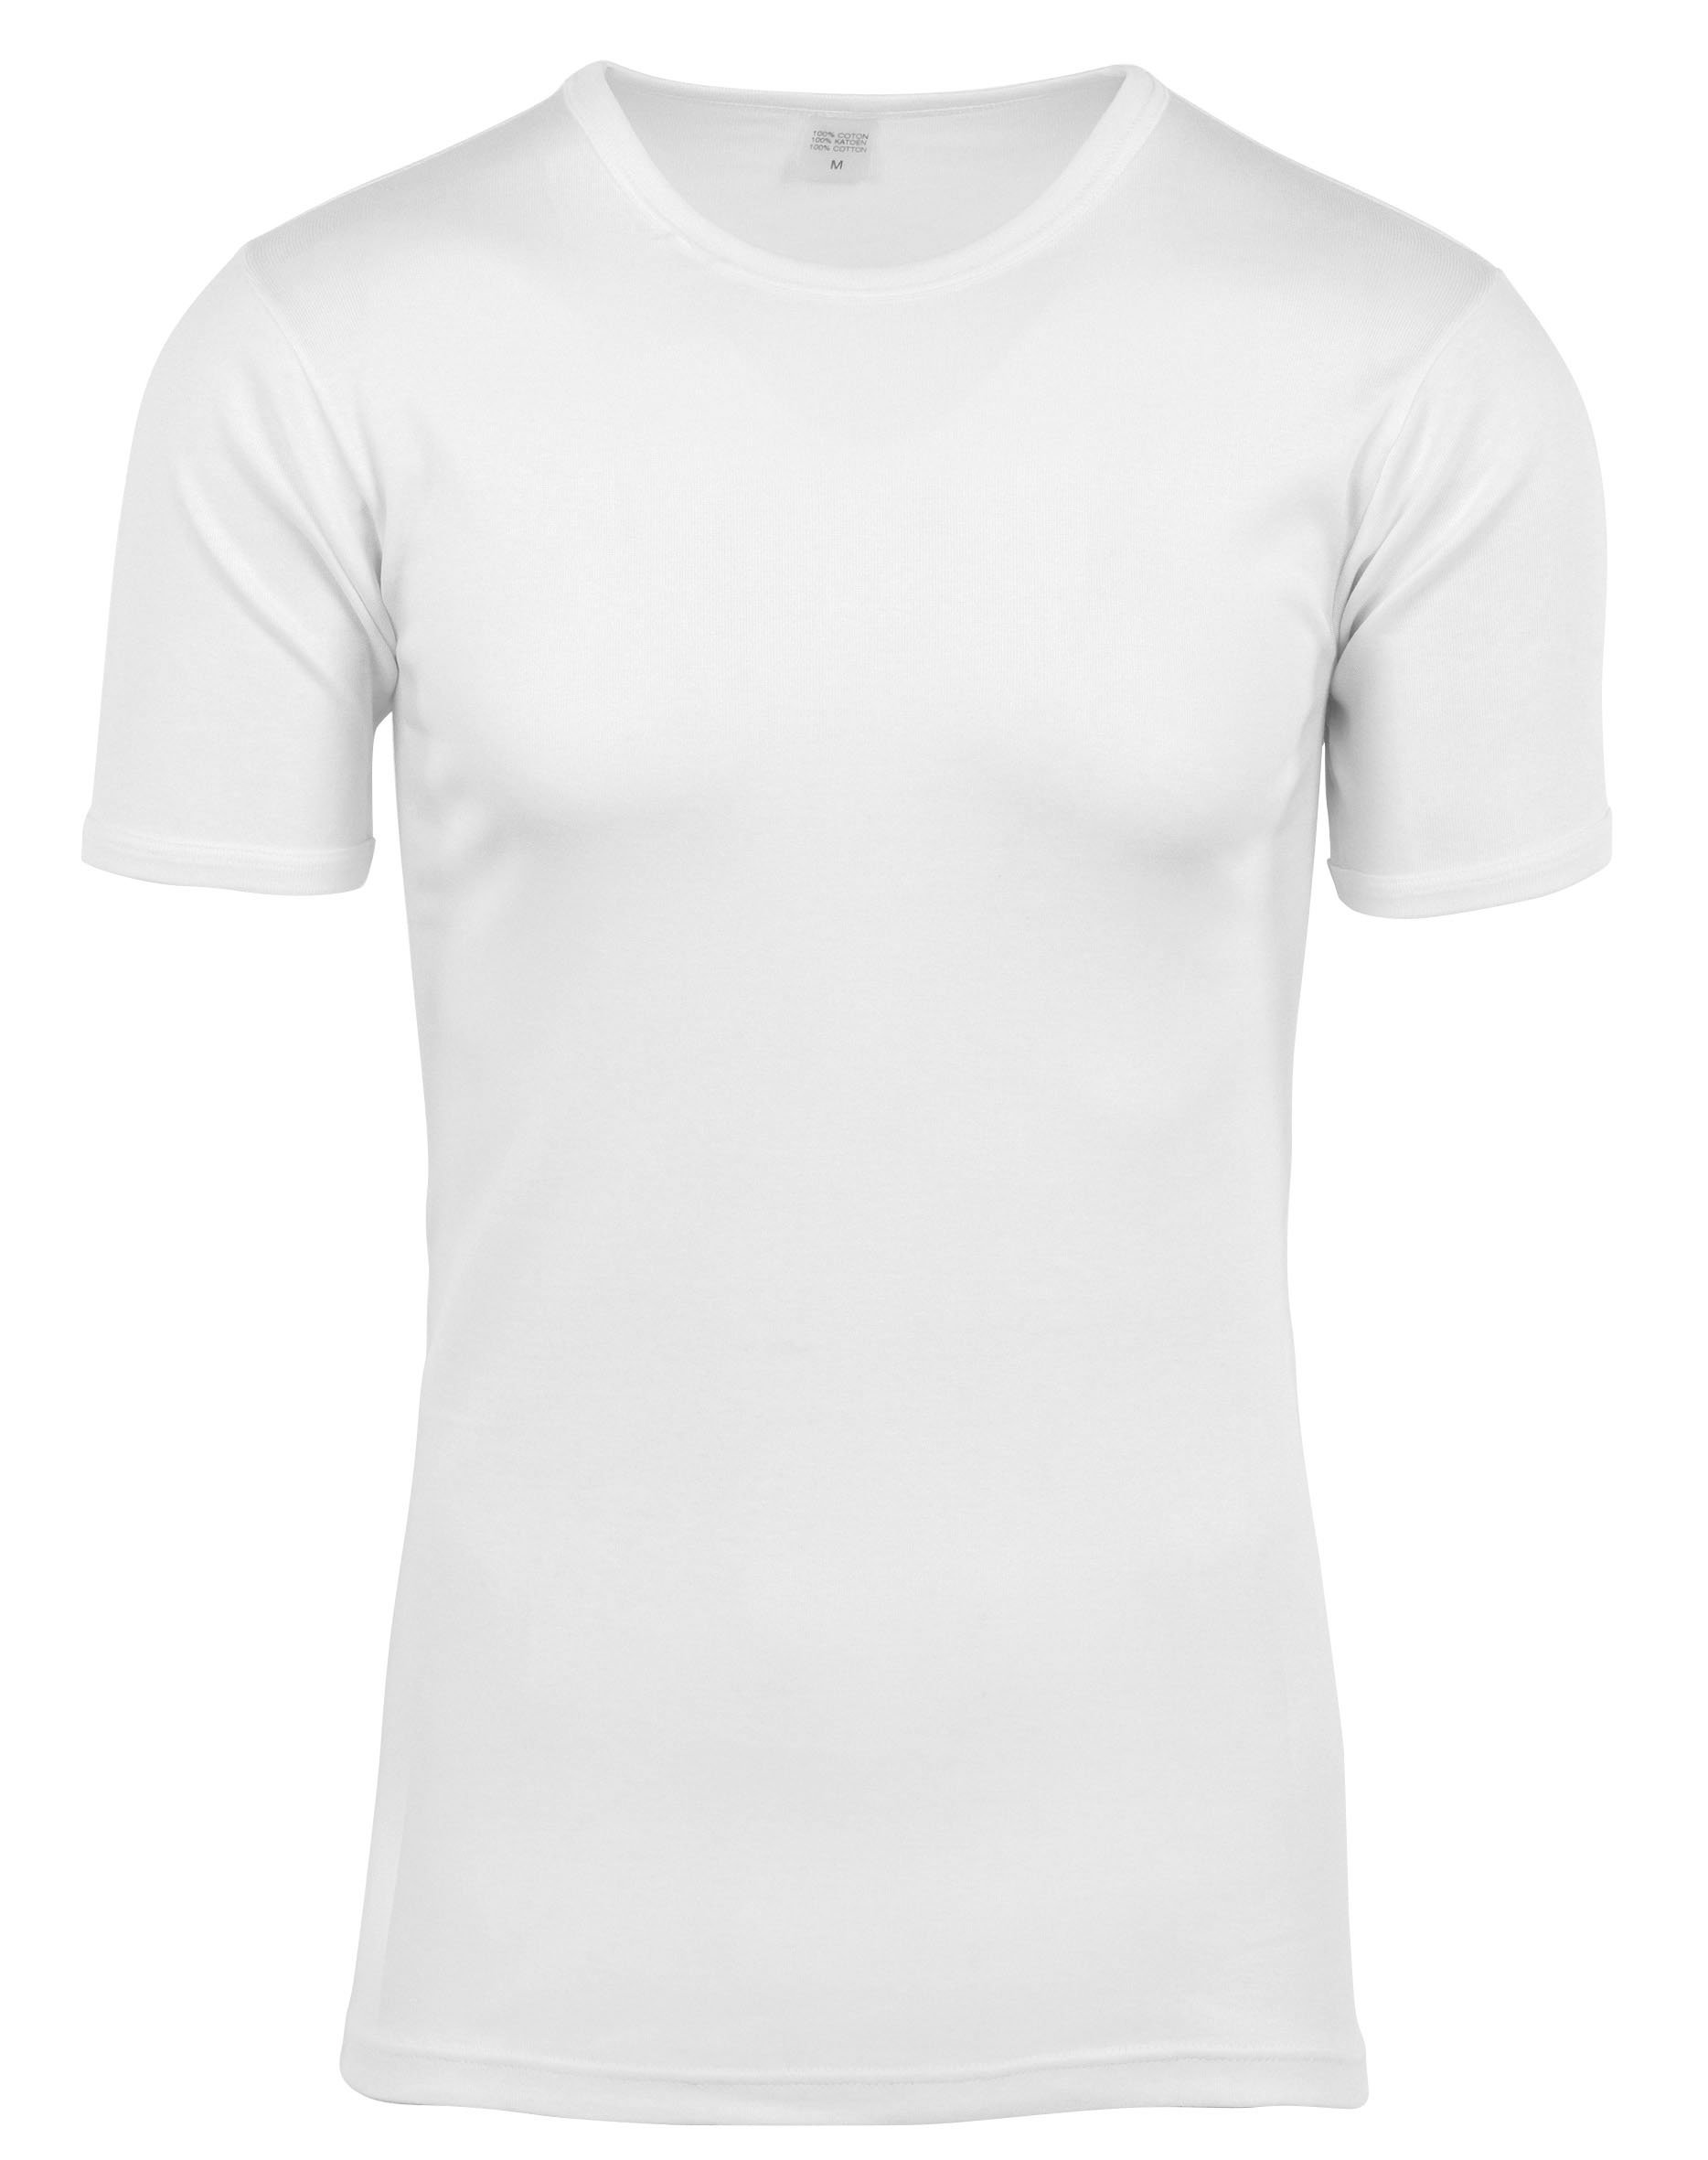 T-shirt blanc homme